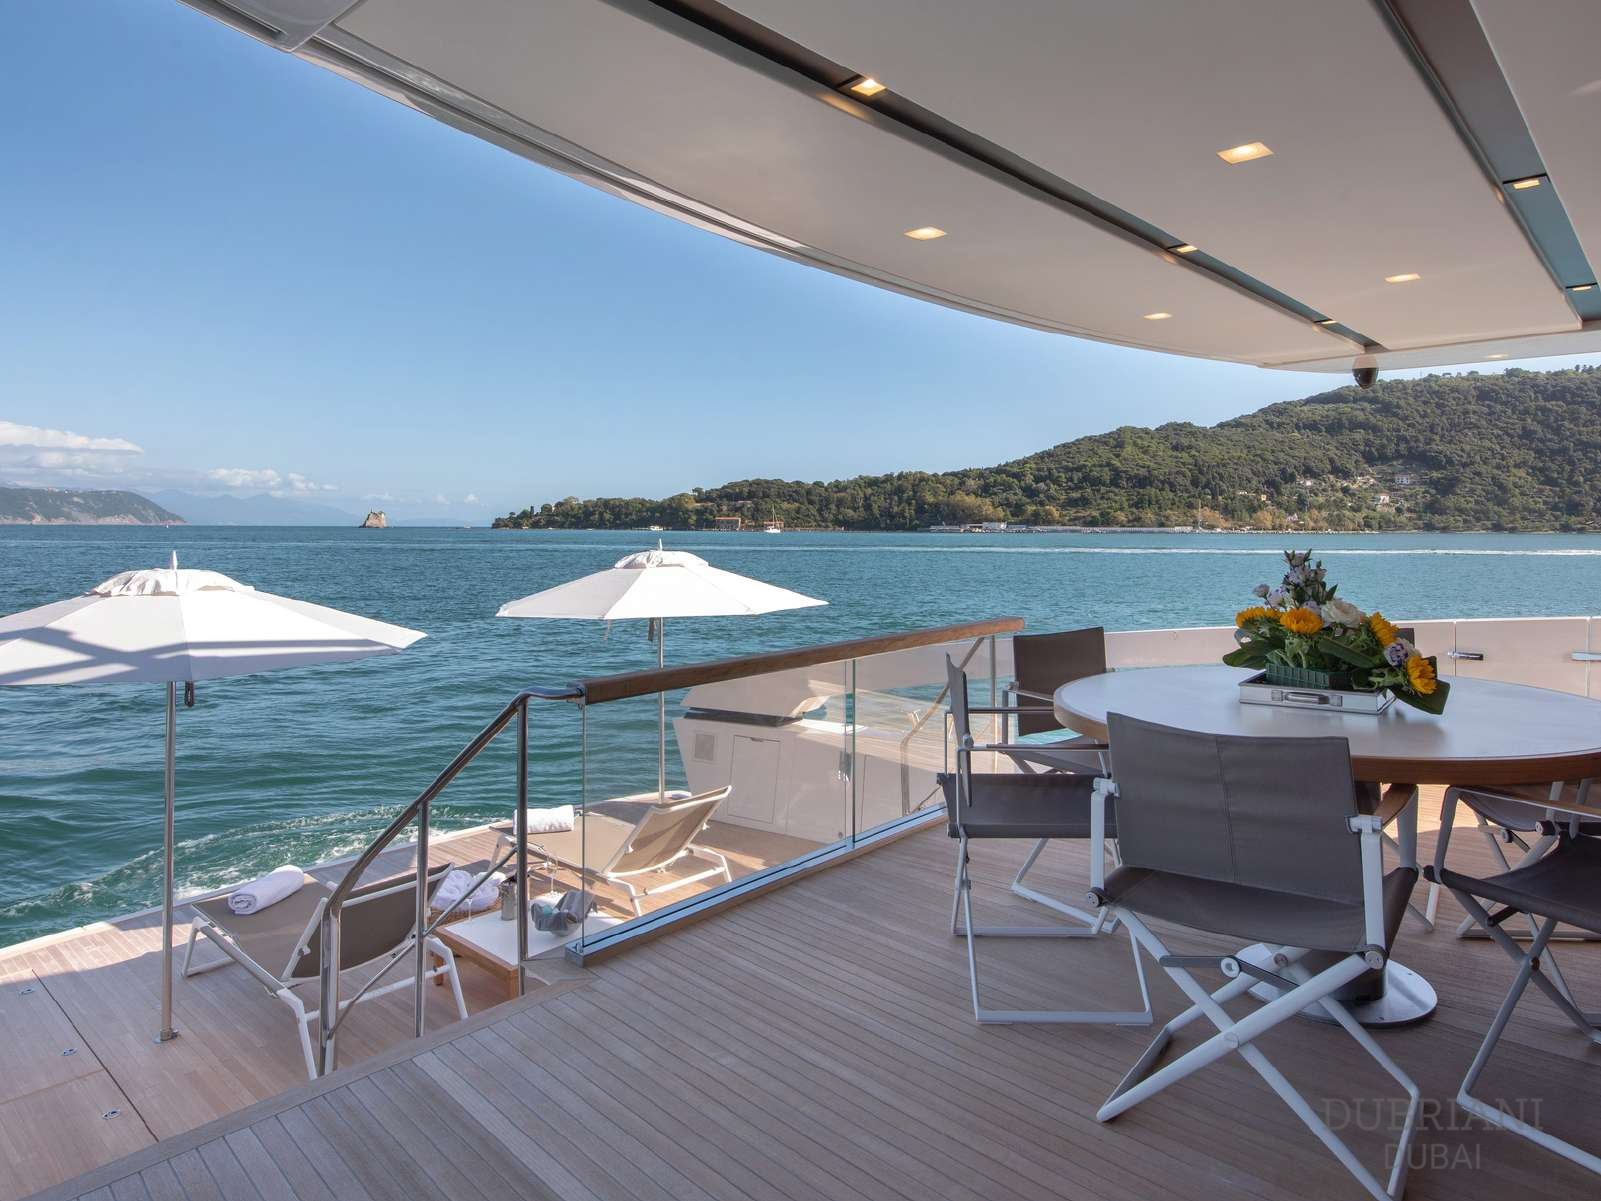 Luxurious sunbathing area on the spacious deck of the San Lorenzo SX88.